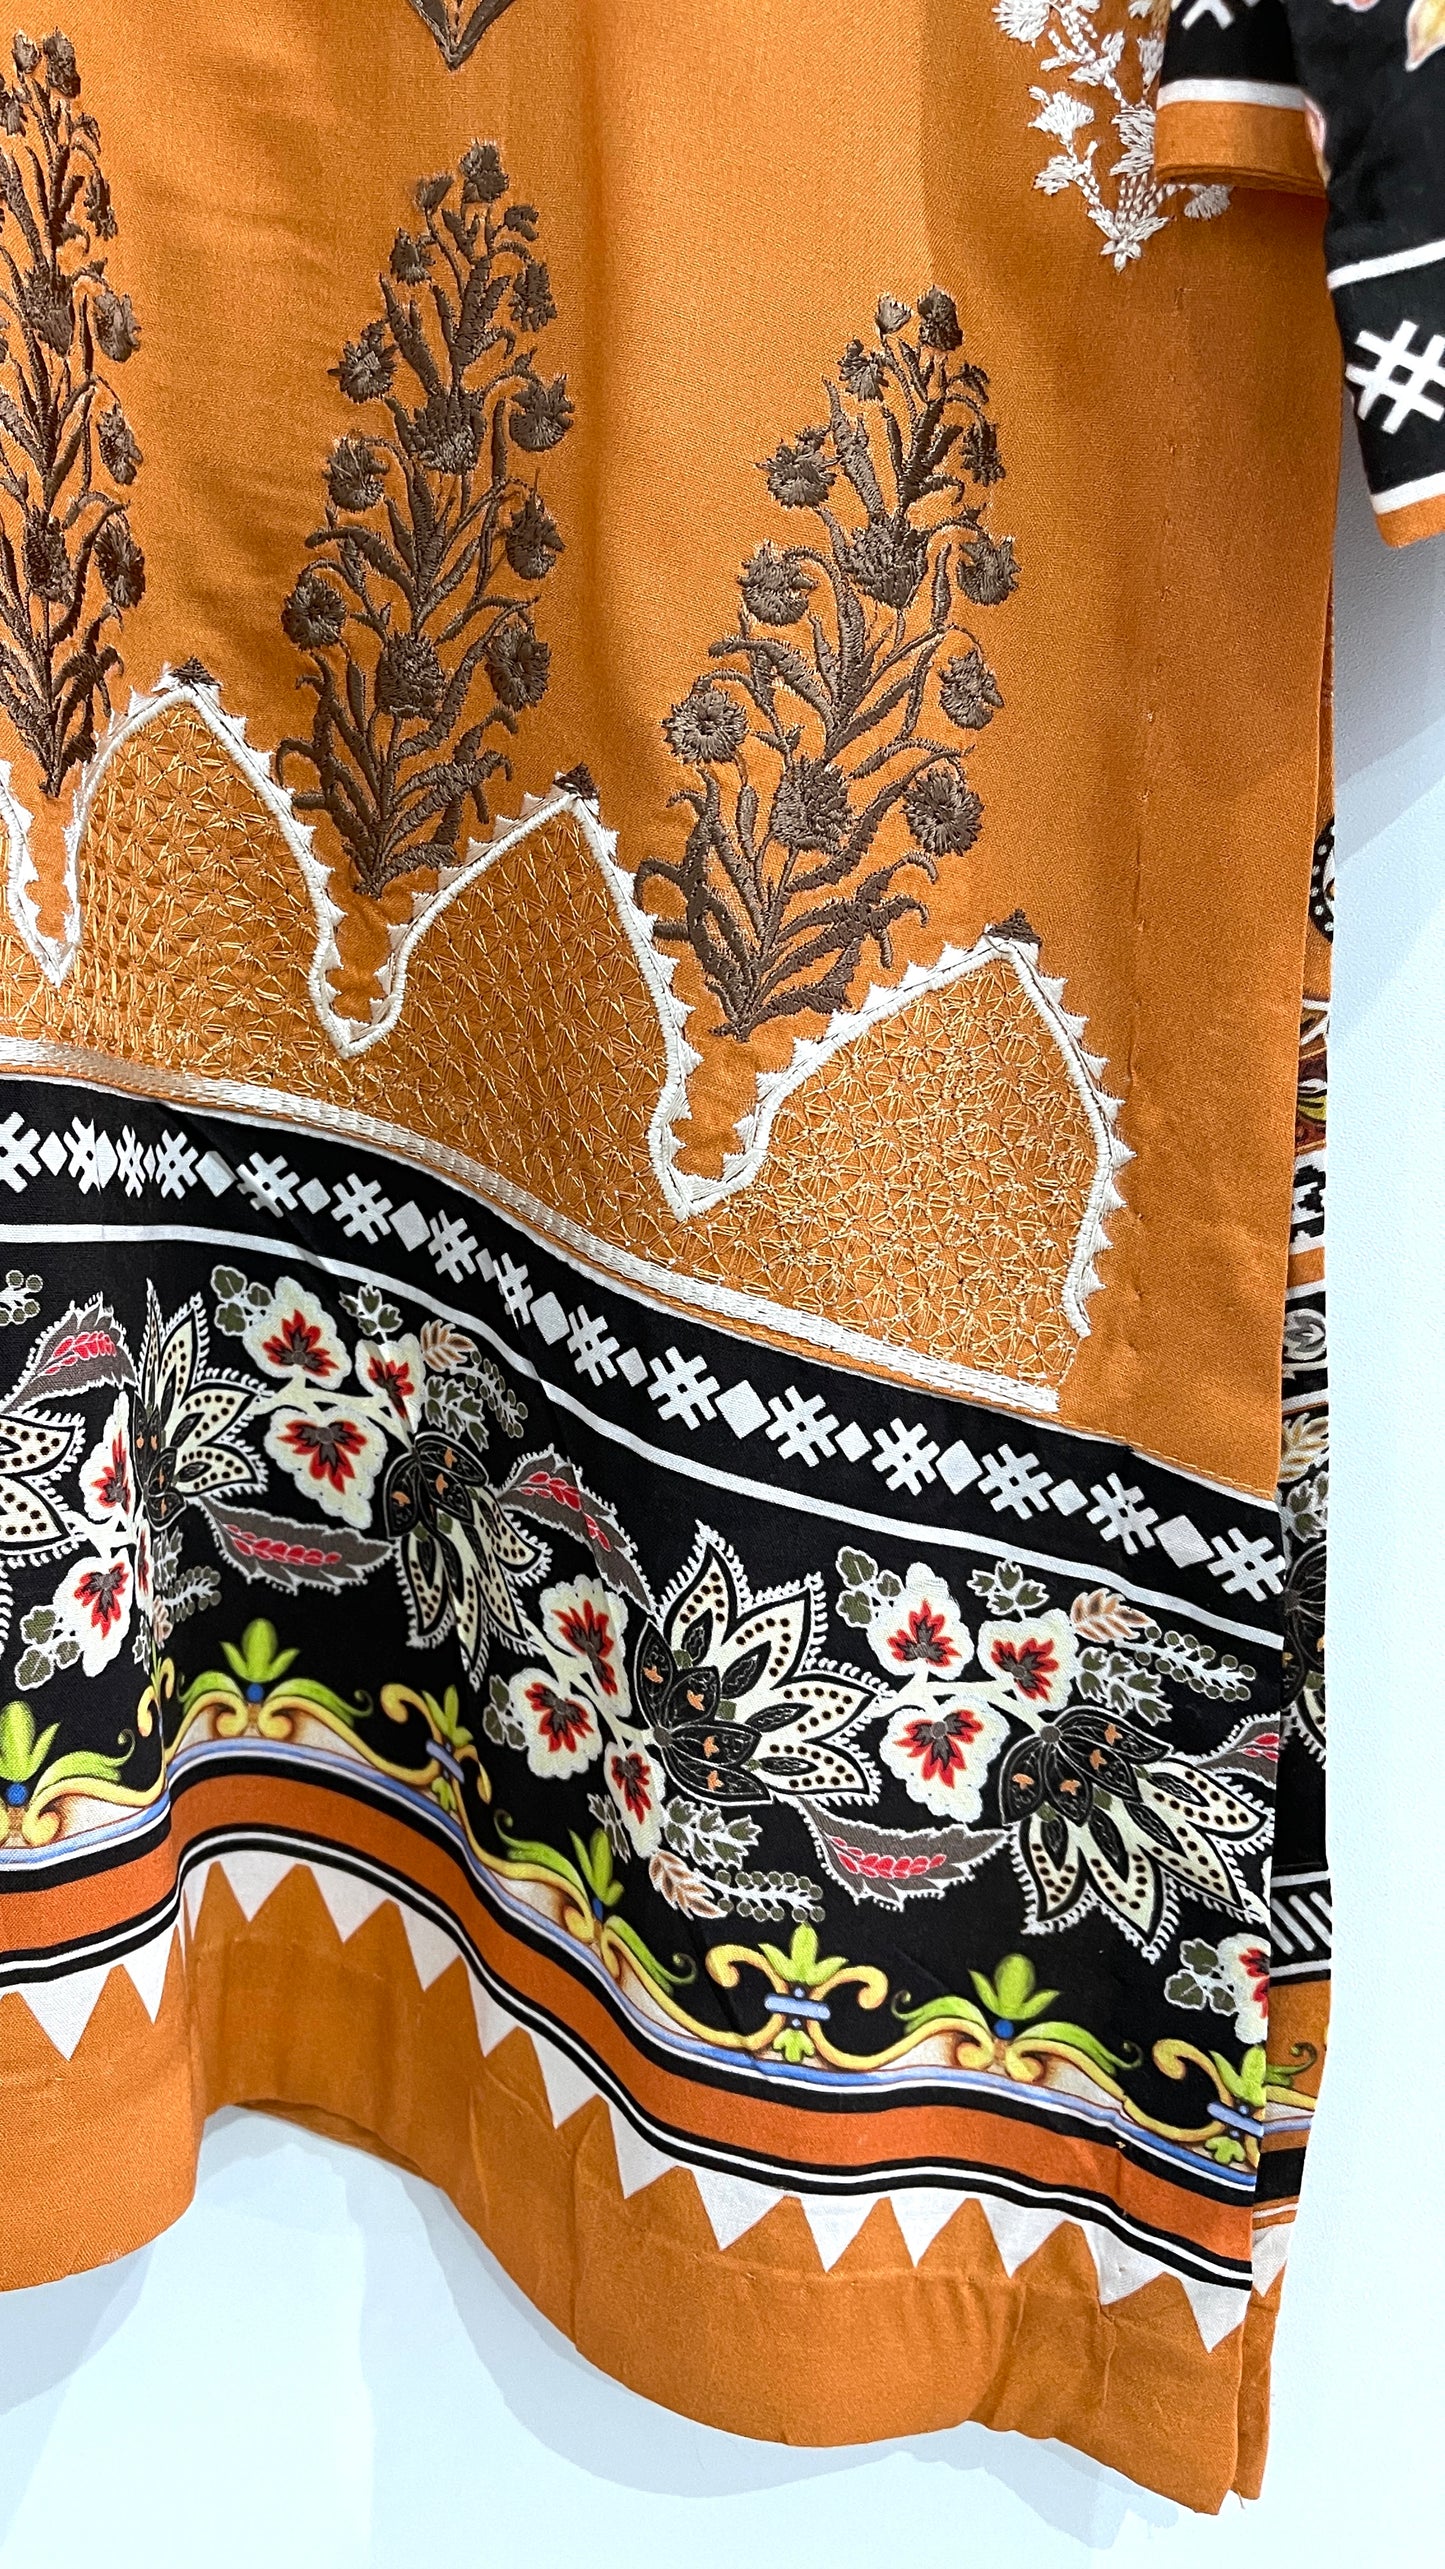 Original KHAS Saffron Stitched Printed Linen Suit with Embroidery